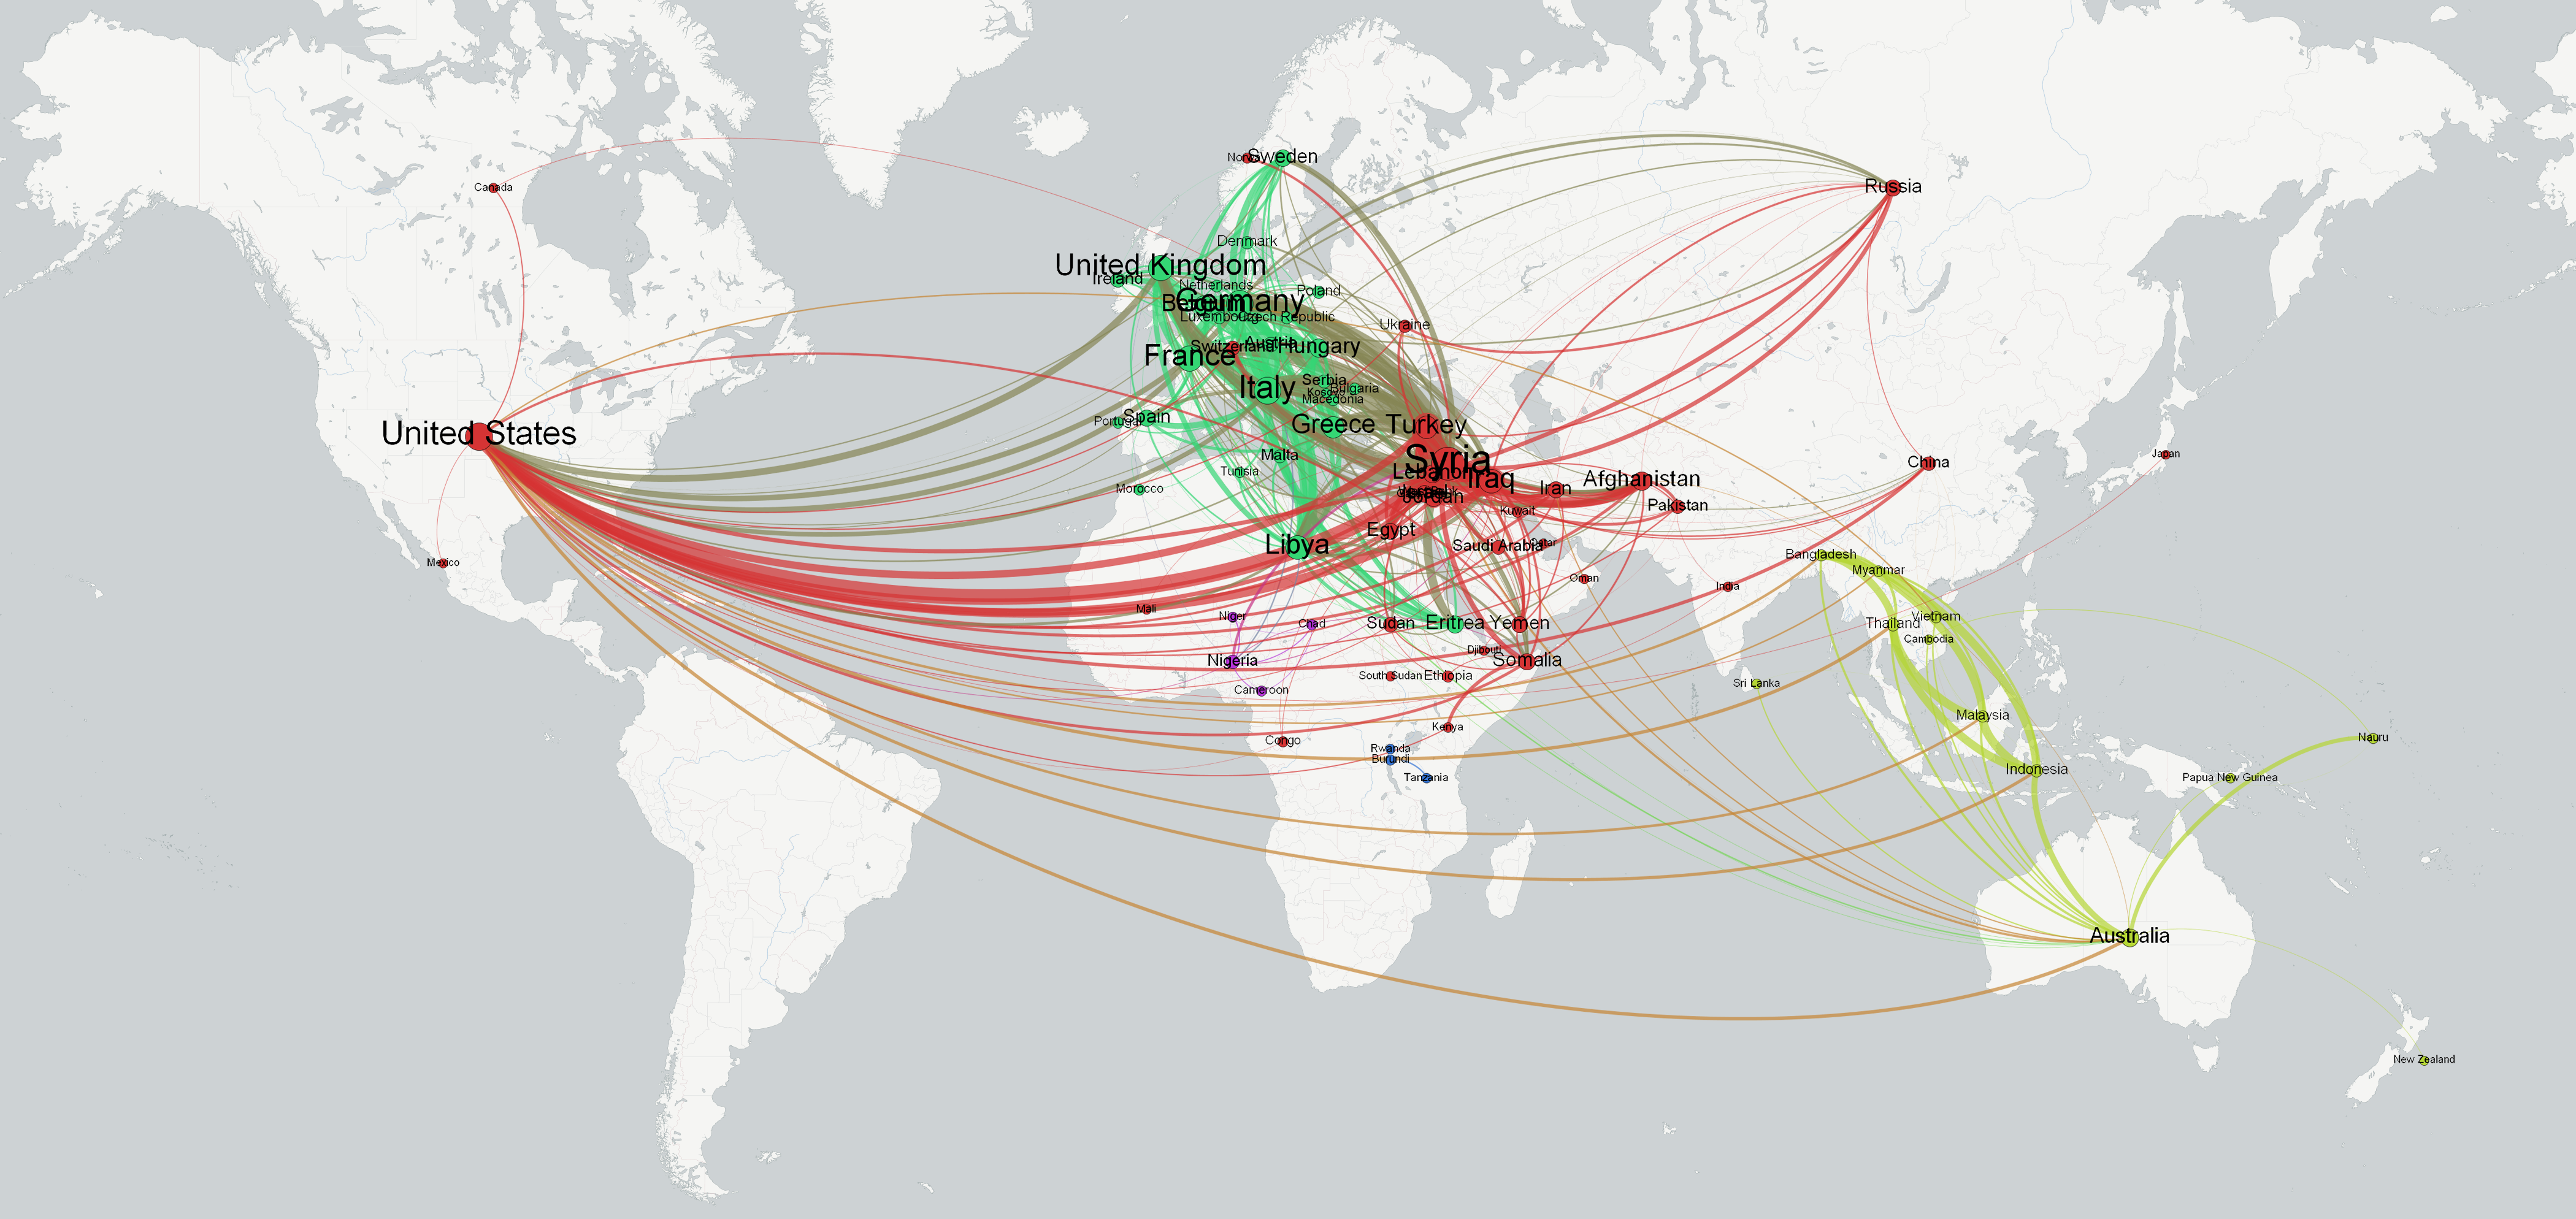 Network Visualization of Global Refugee Flows – The GDELT Project